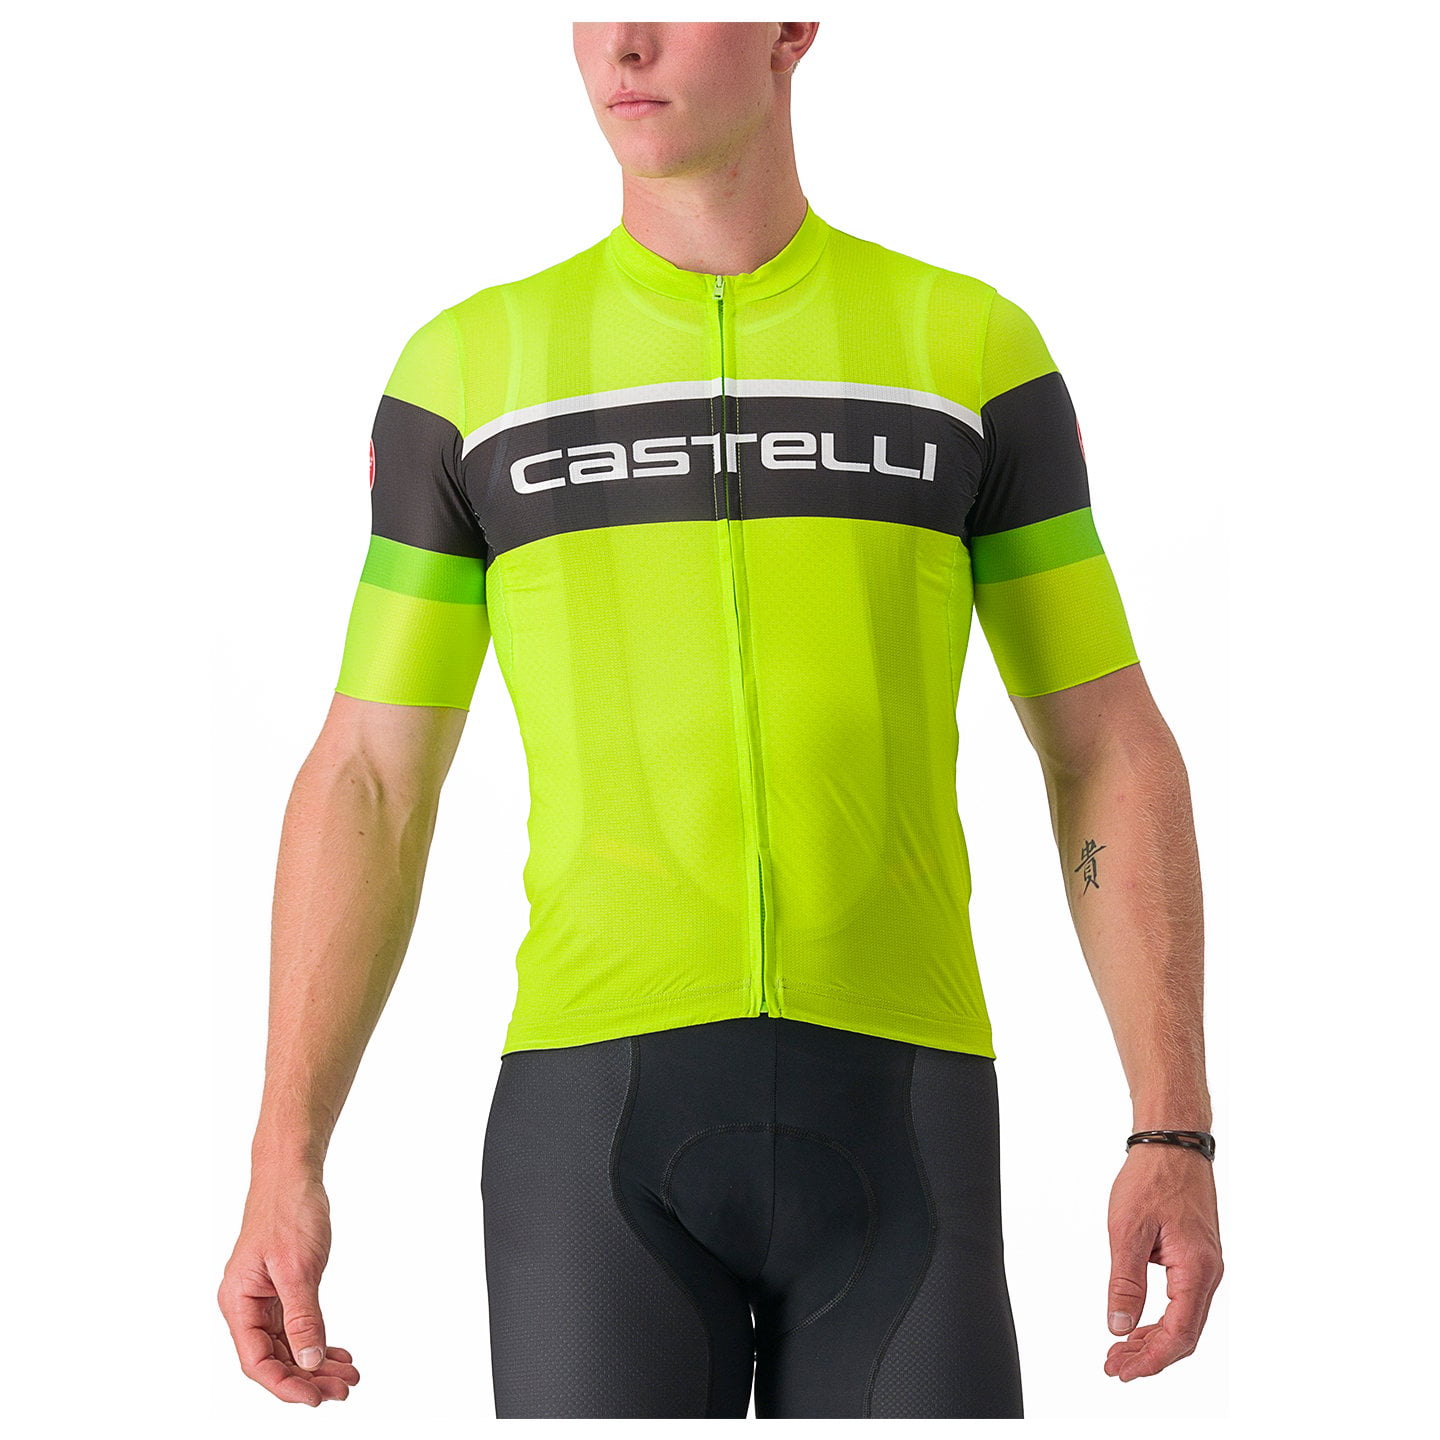 CASTELLI Scorpione 3 Short Sleeve Jersey Short Sleeve Jersey, for men, size 3XL, Cycling jersey, Cycle clothing